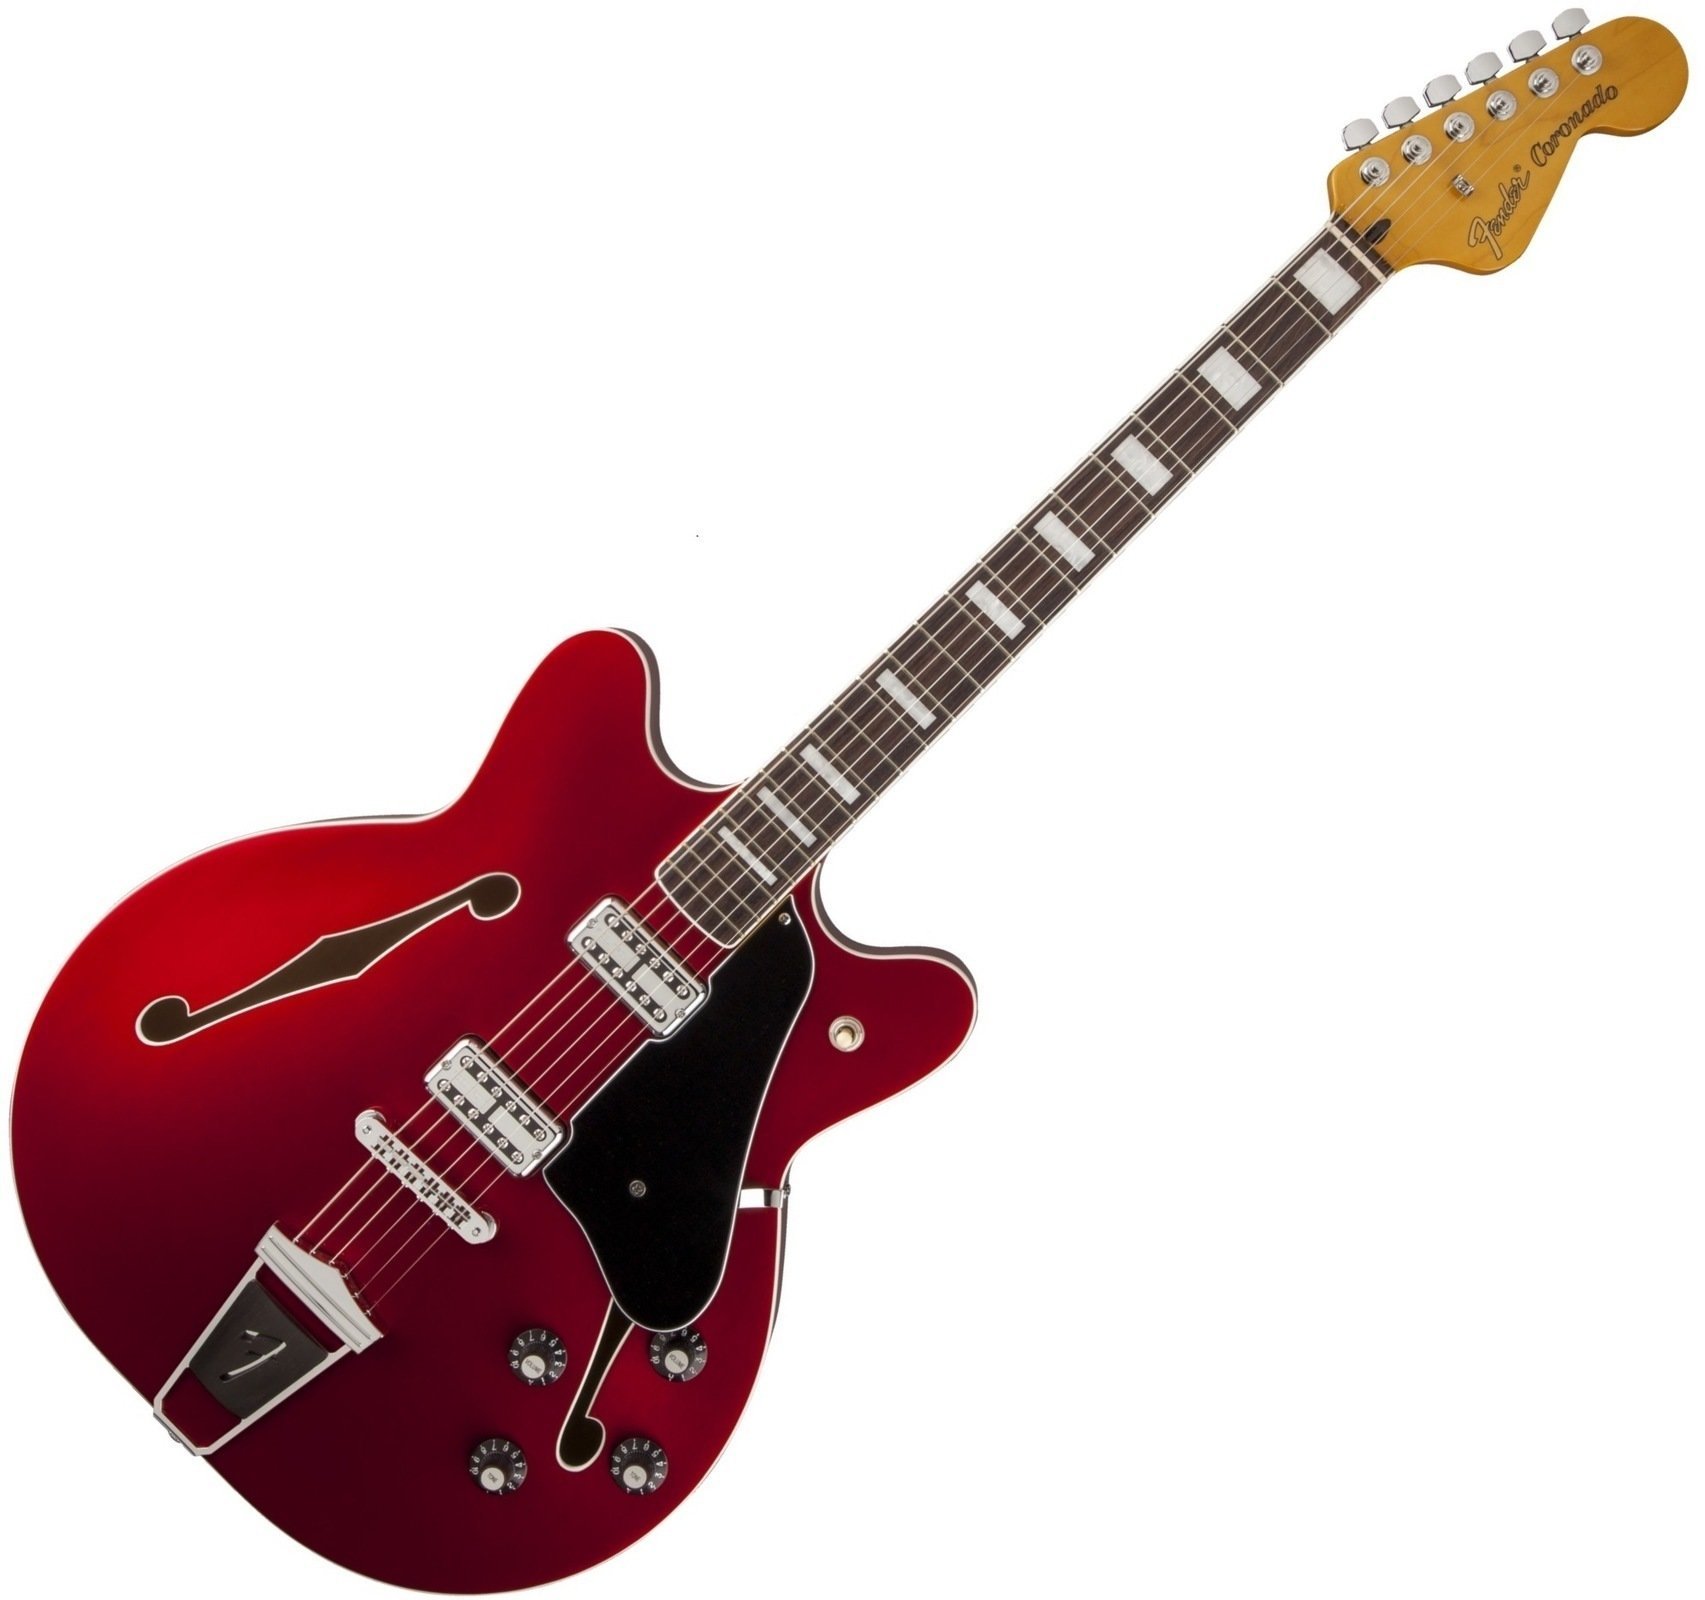 Semiakustická kytara Fender Coronado, Rosewood Fingerboard, Candy Apple Red